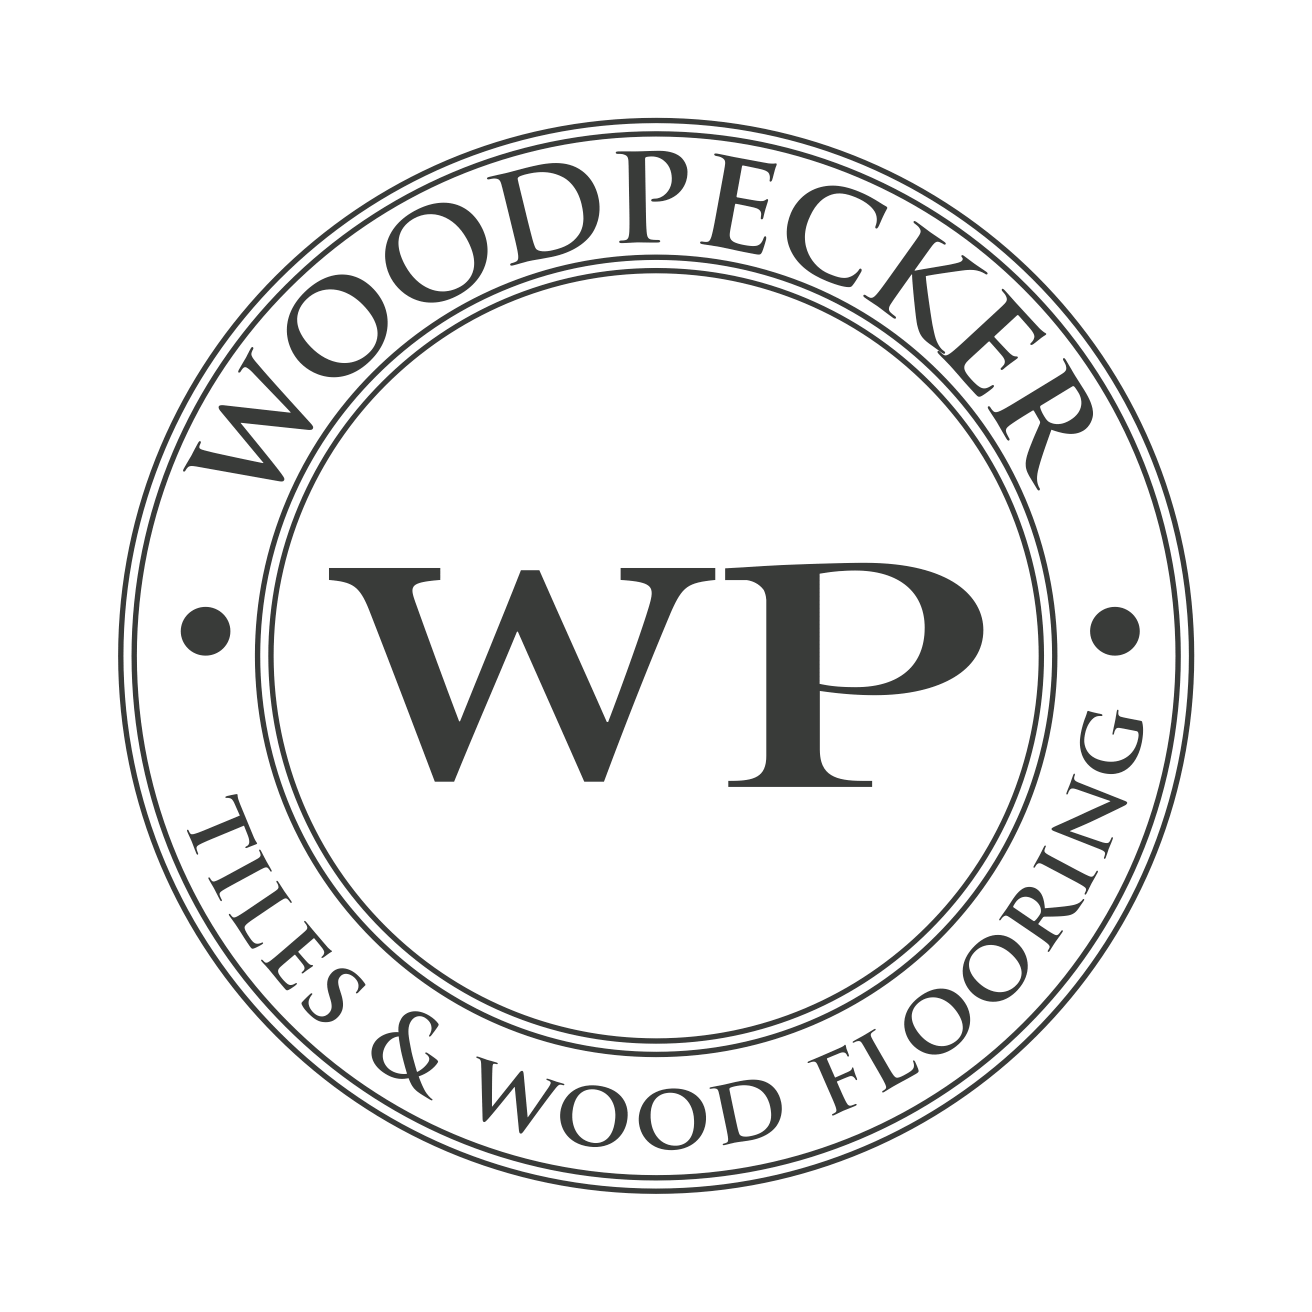 Woodpecker Tiles & Wood Flooring